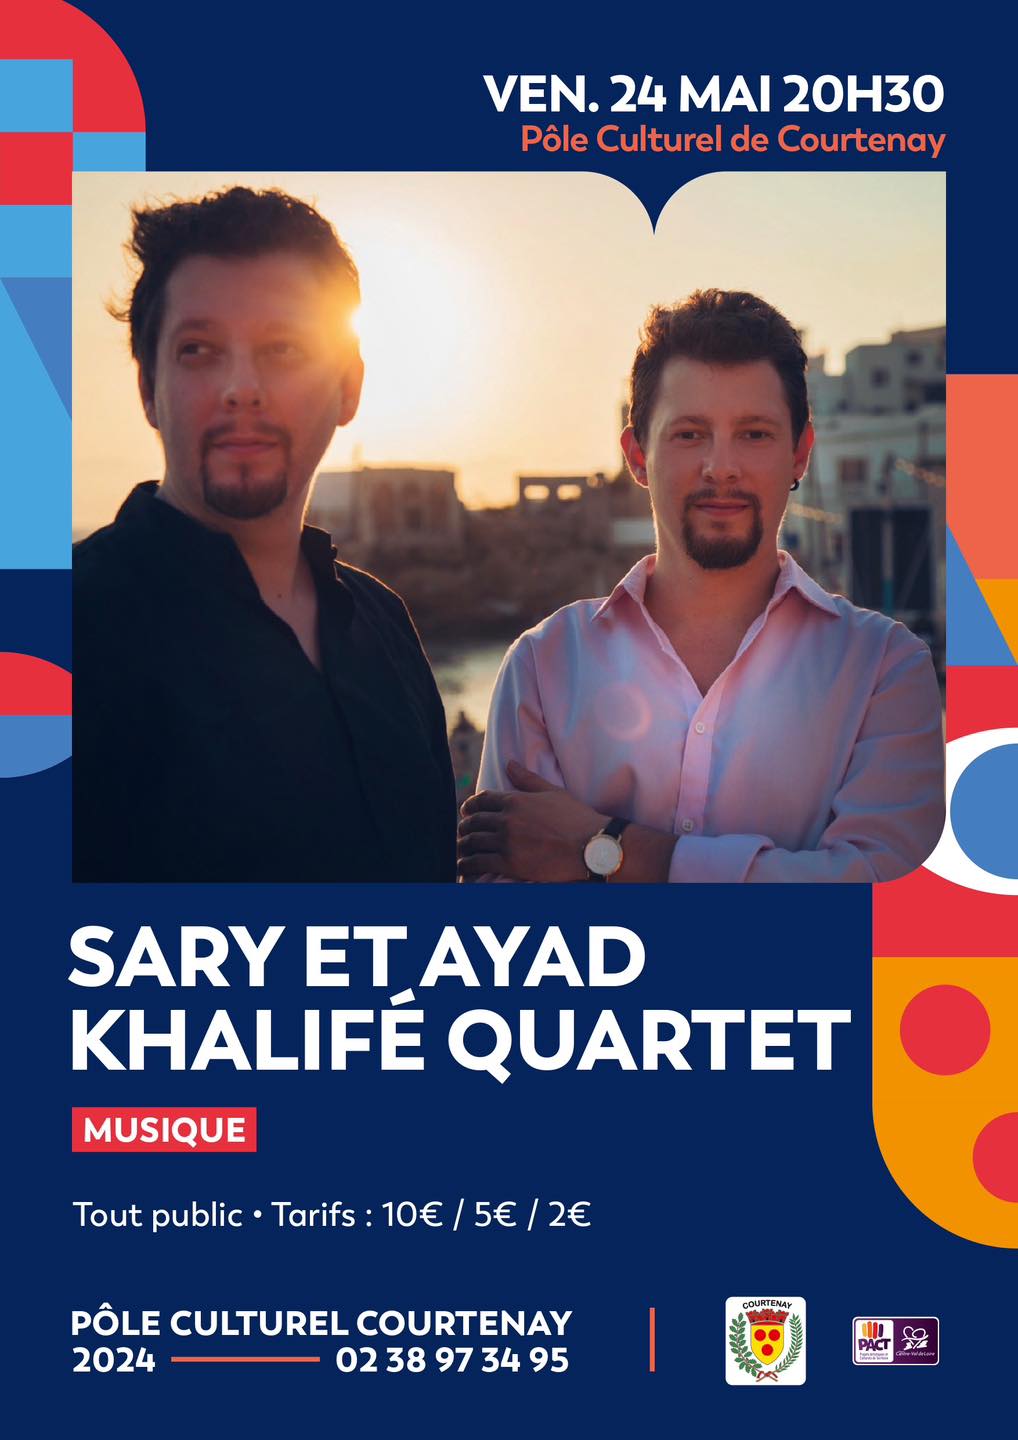 Sary et Ayad Khalifé Quartet